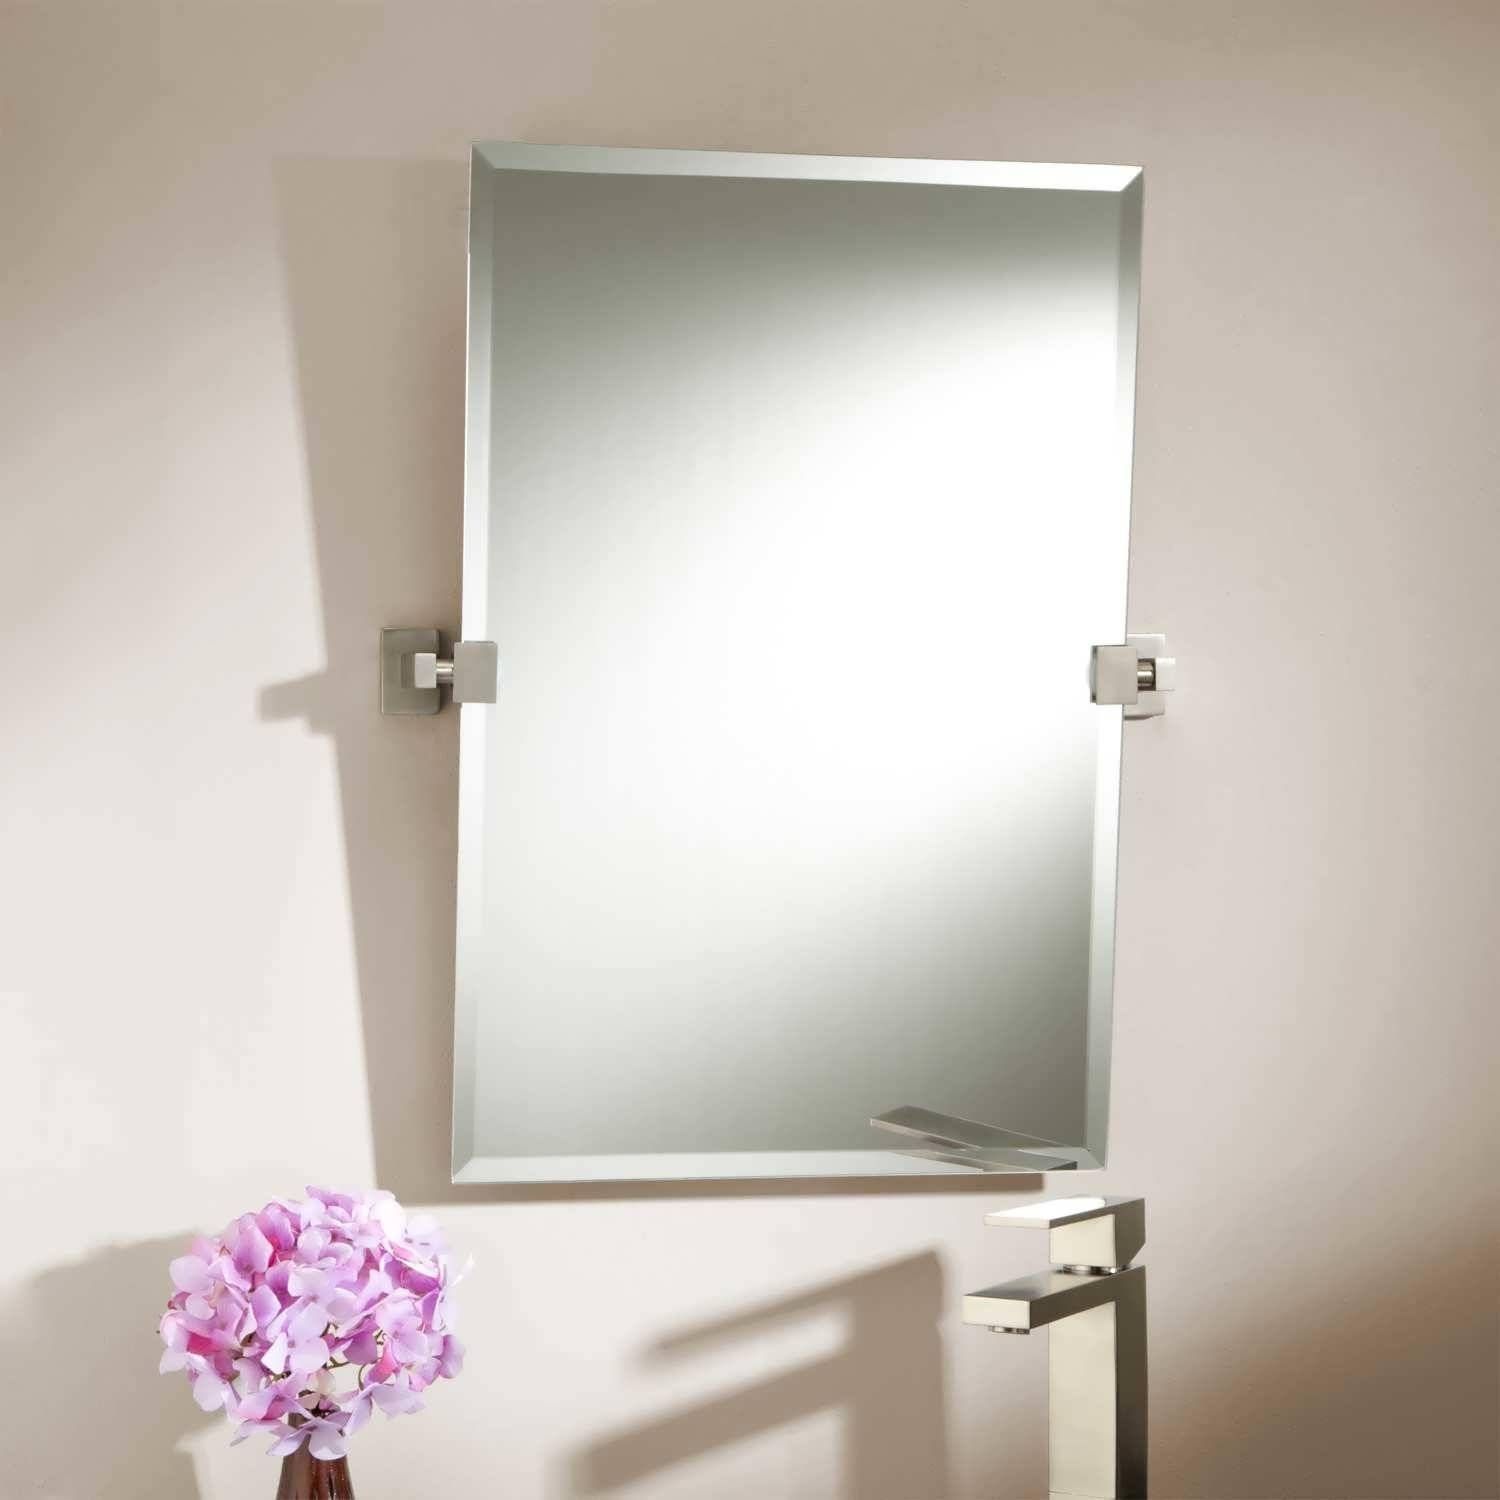 Bathroom : Bathroom Mirrors Double Wide Bathroom Mirror Master Throughout Ornate Bathroom Mirrors (View 18 of 25)